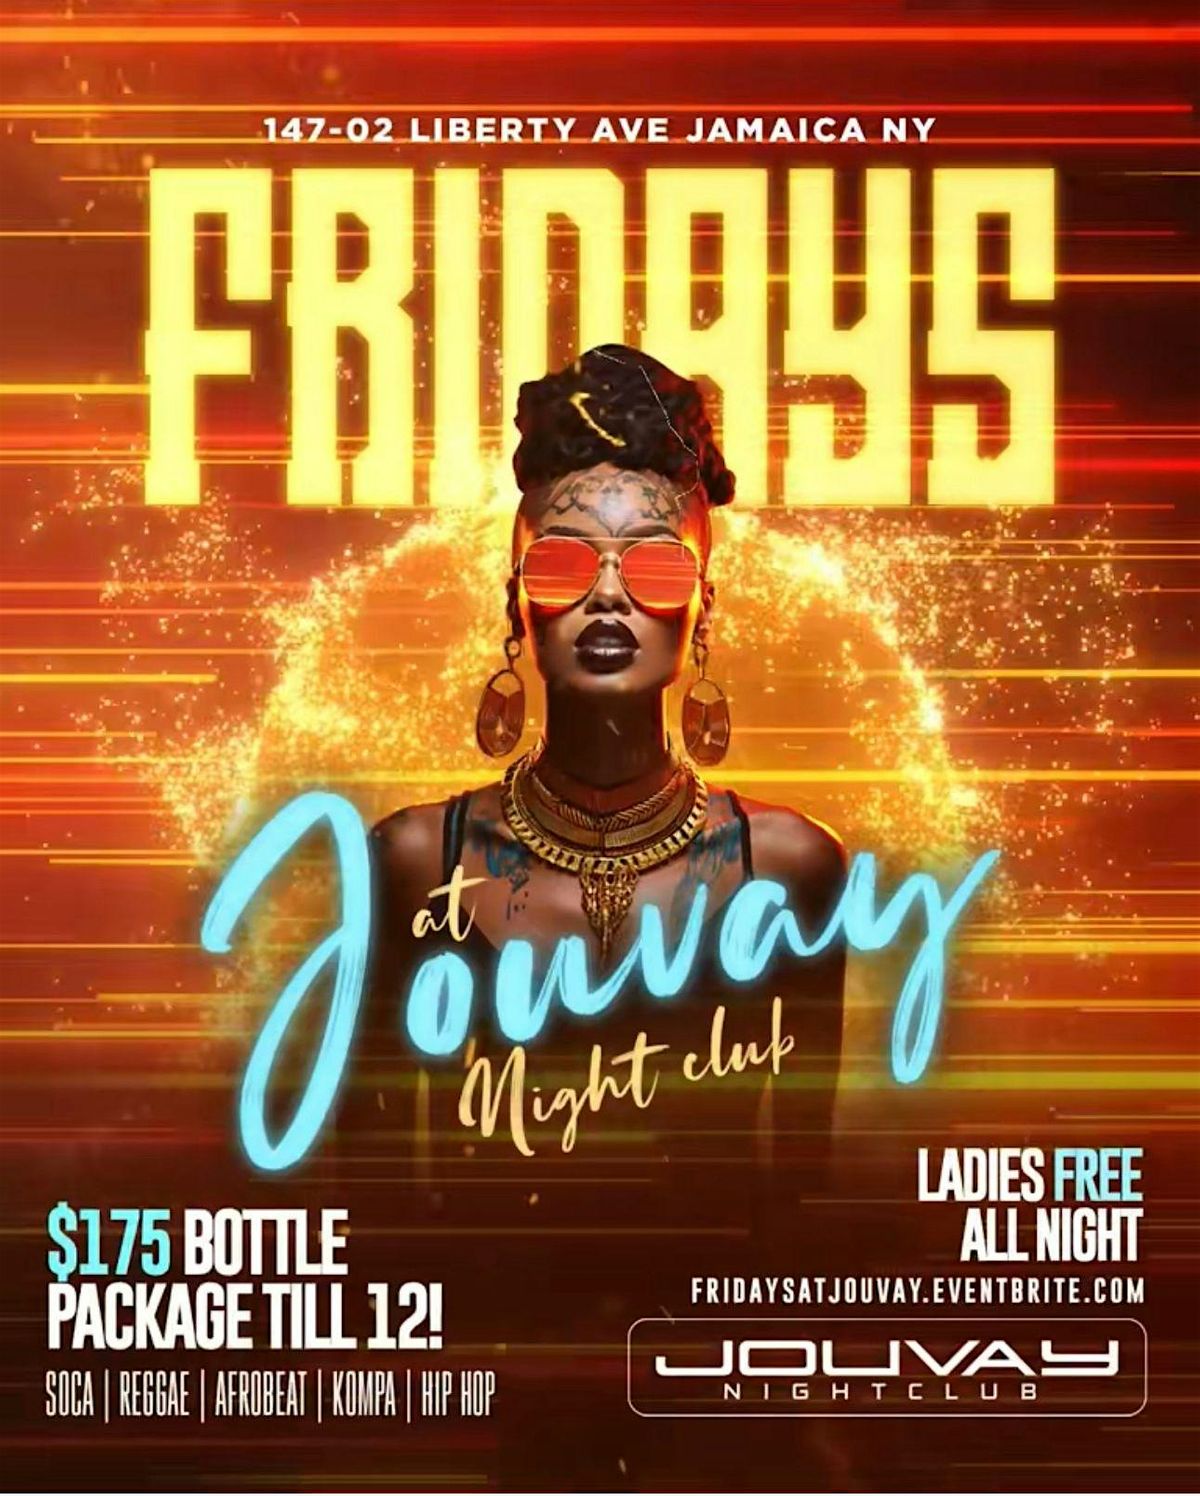 Fridays @ Jouvay Nightclub